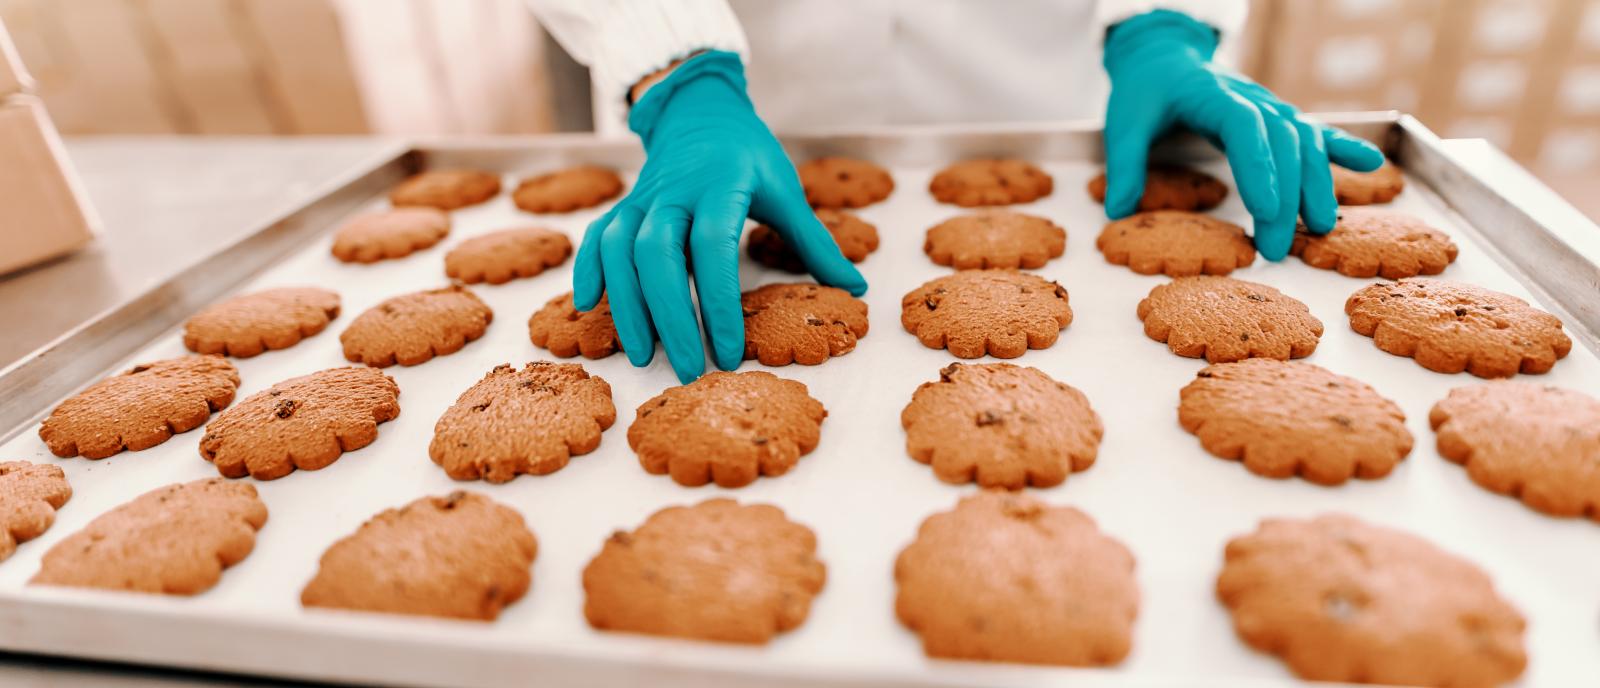 Cookies on sheet pan